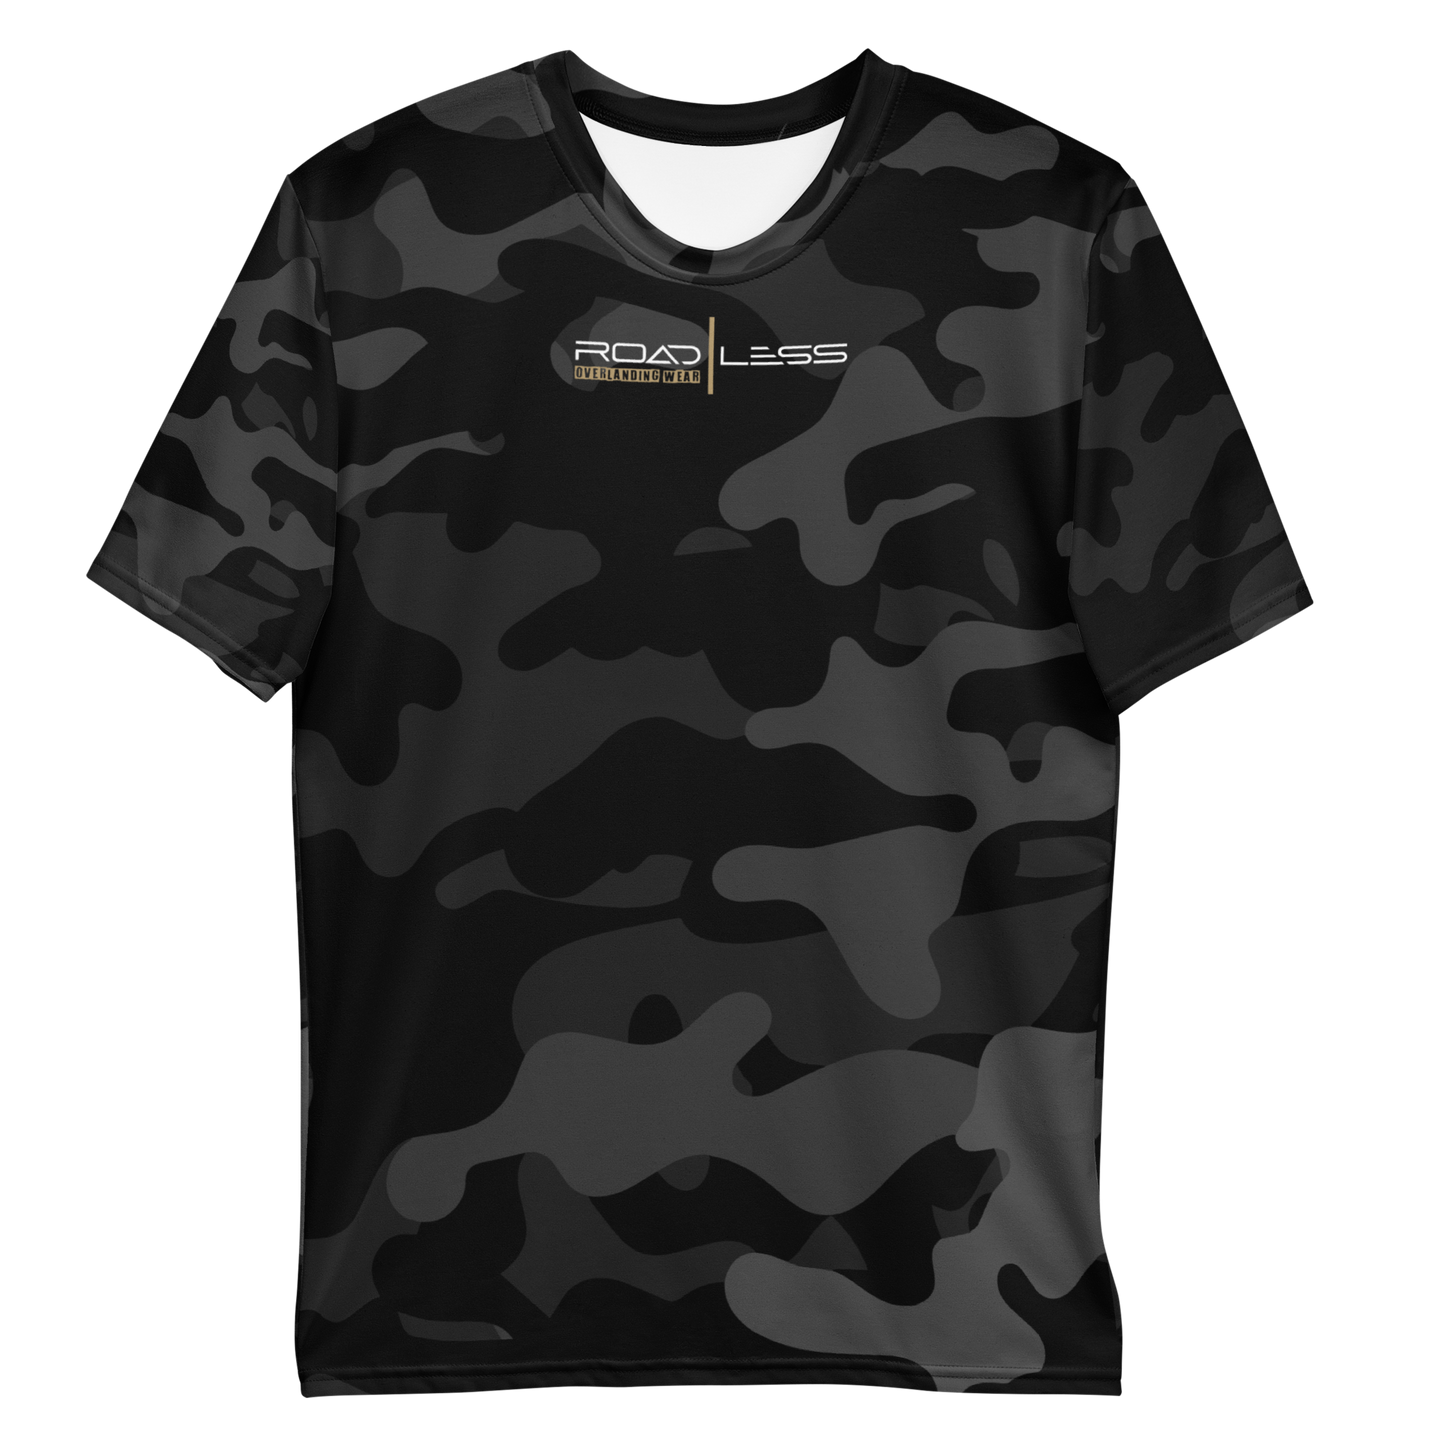 Herren-T-Shirt (black camo Road Less)